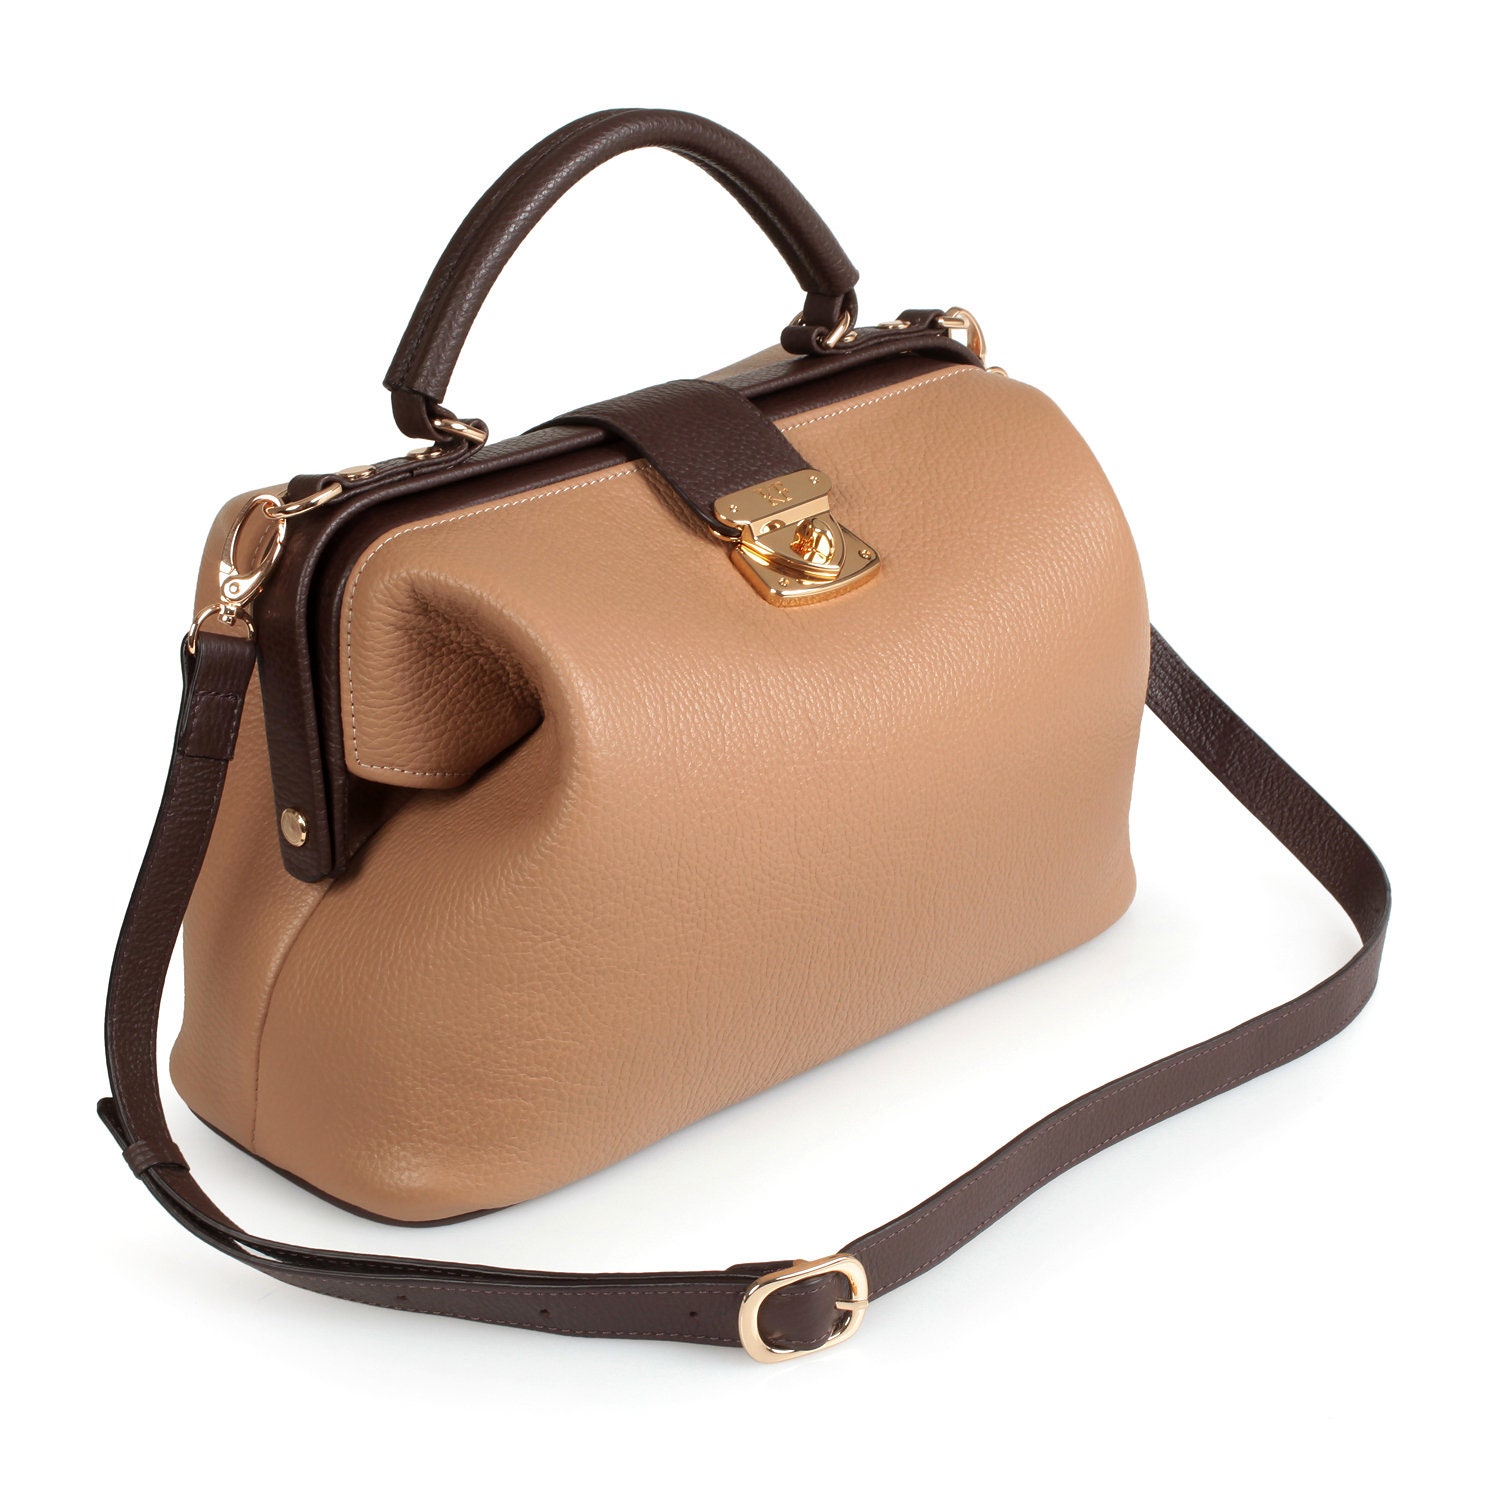 Leather doctor bag for women Beige Leather Handbag Top | Etsy